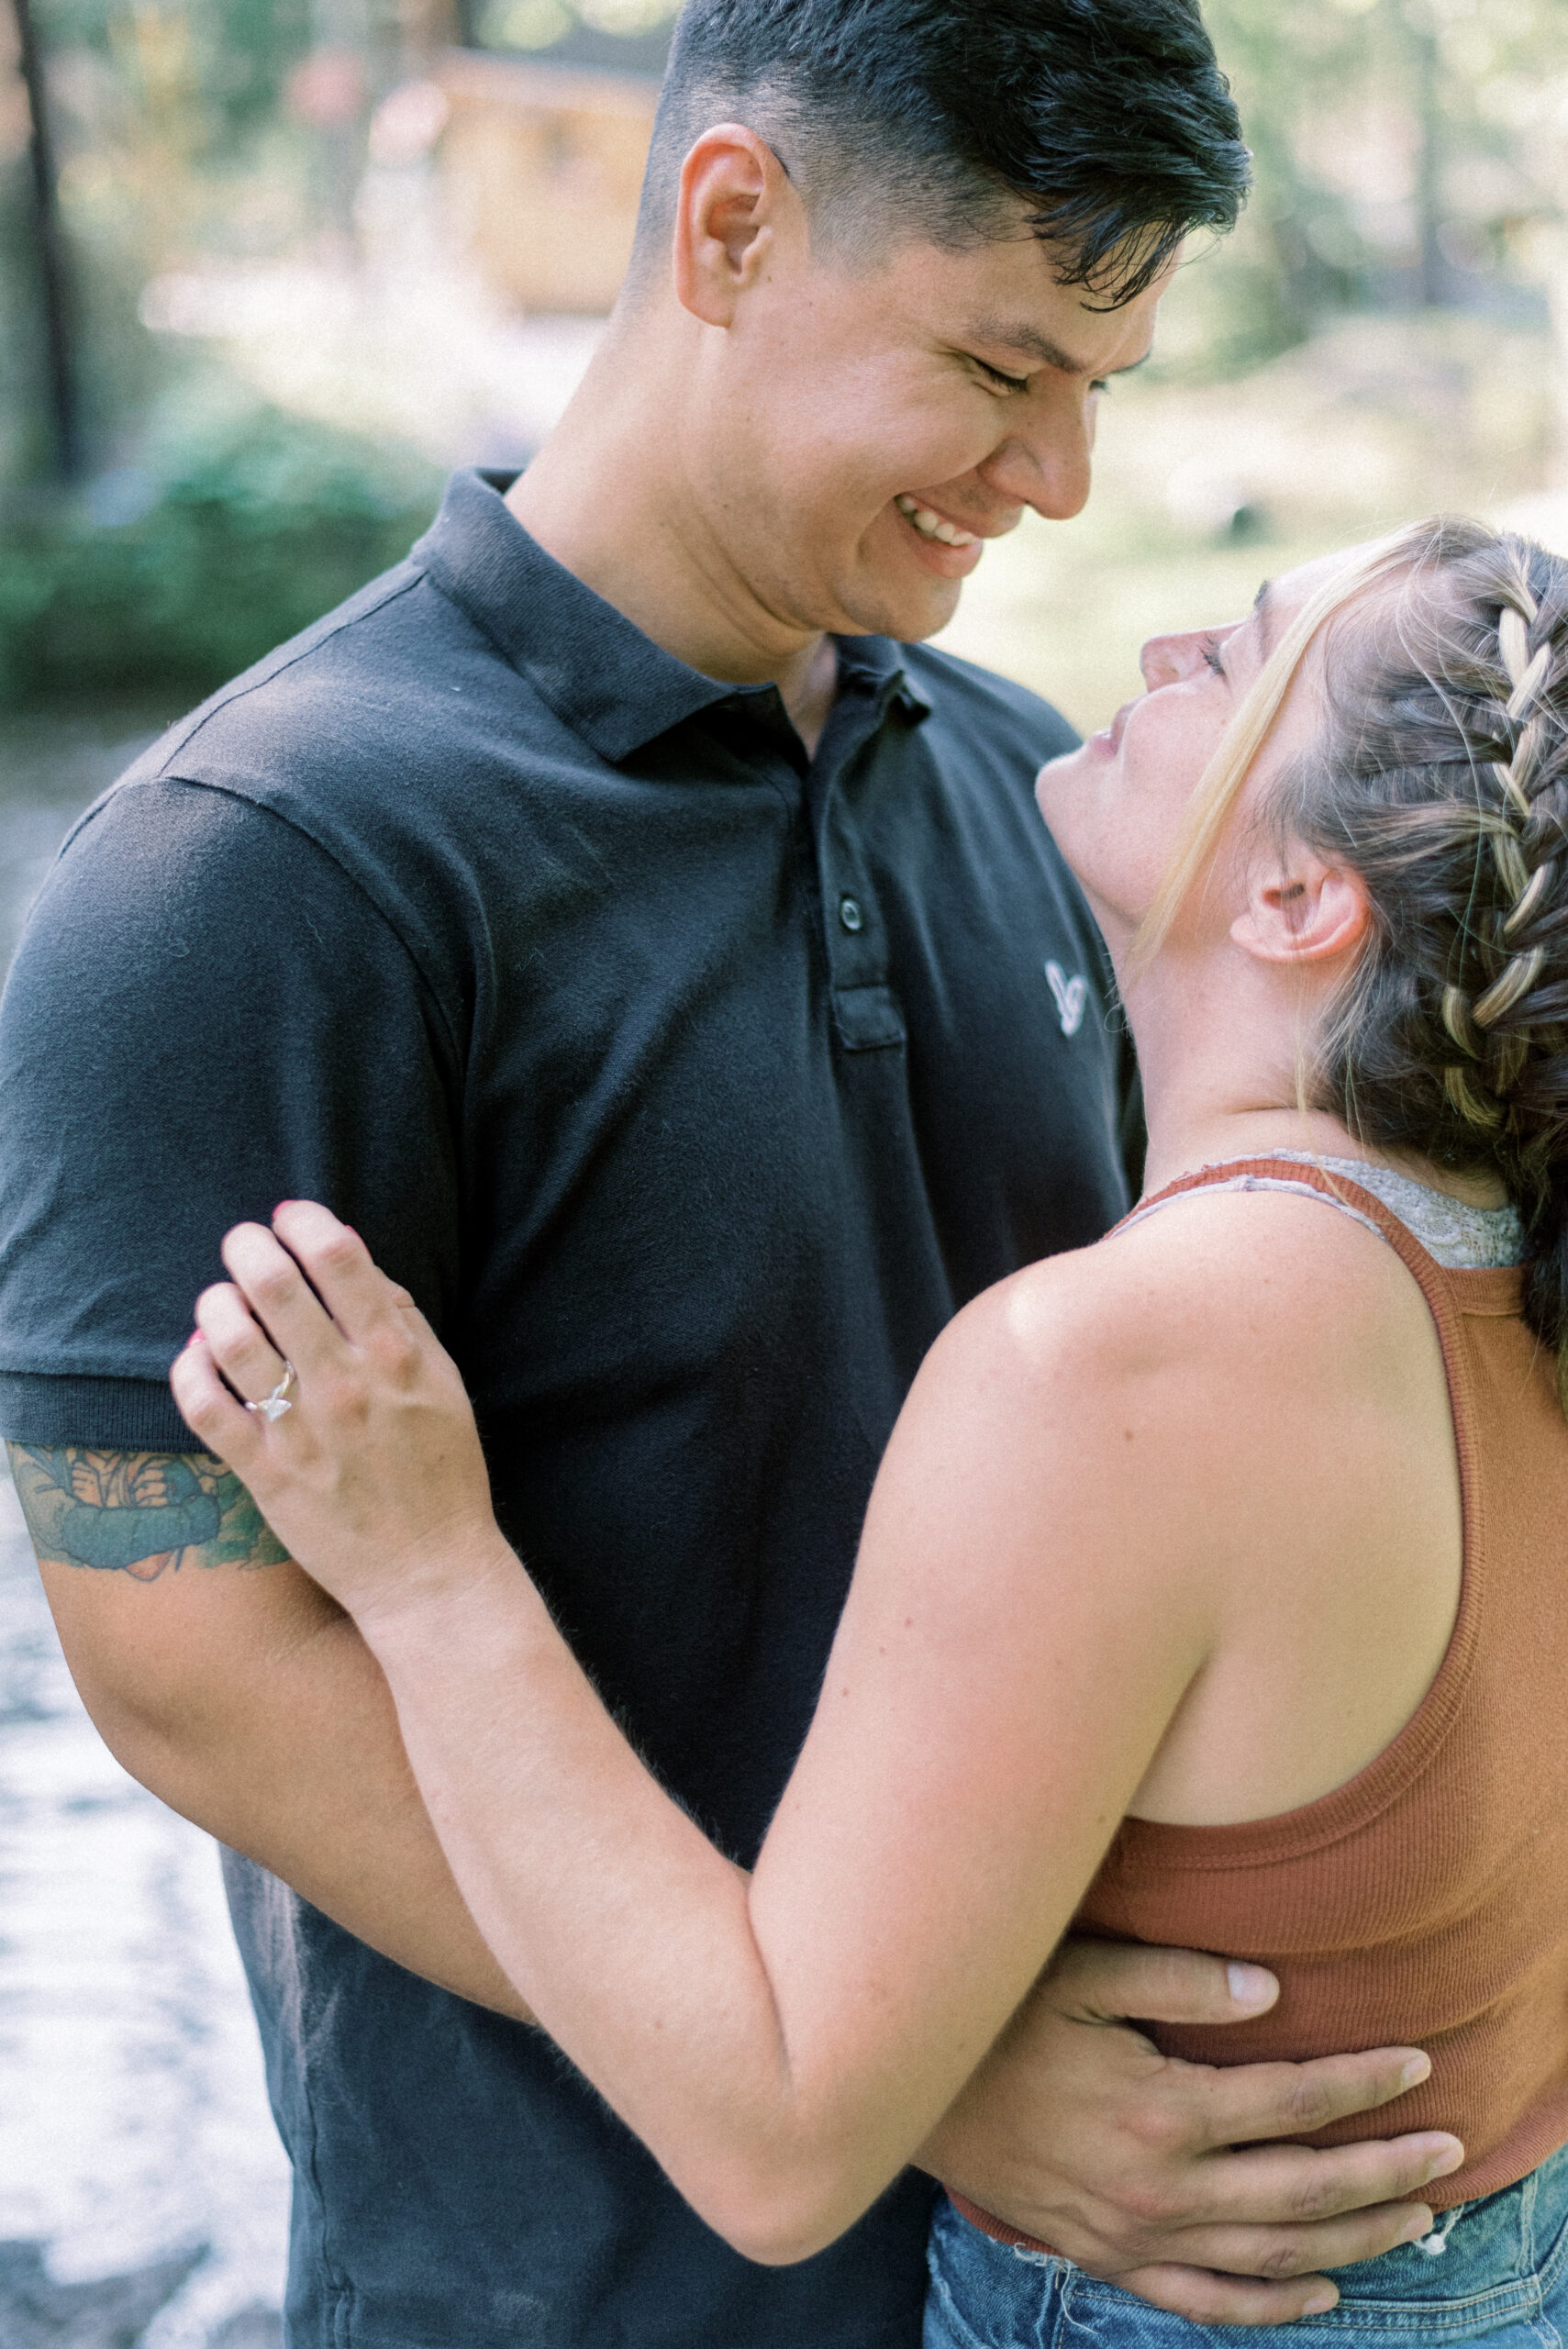 Maryland photographer captures couple hugging and celebrating knoebels proposal